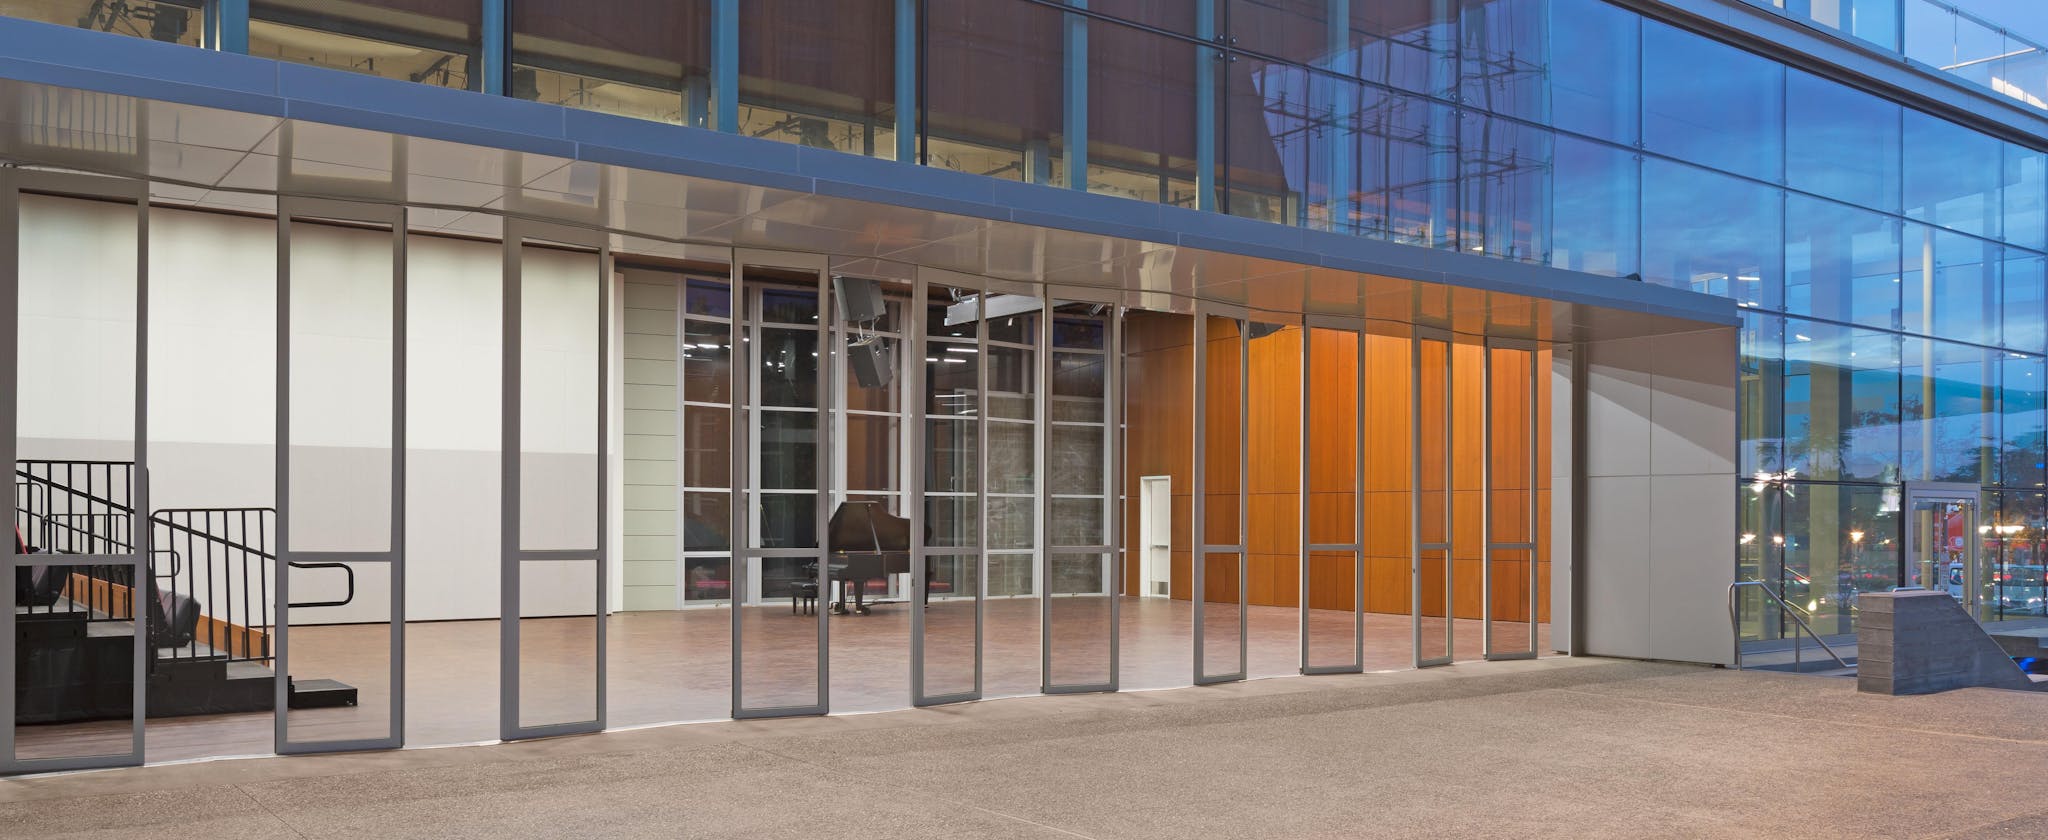 21st Century Schools - Santa Monica College exterior aluminum sliding glass walls